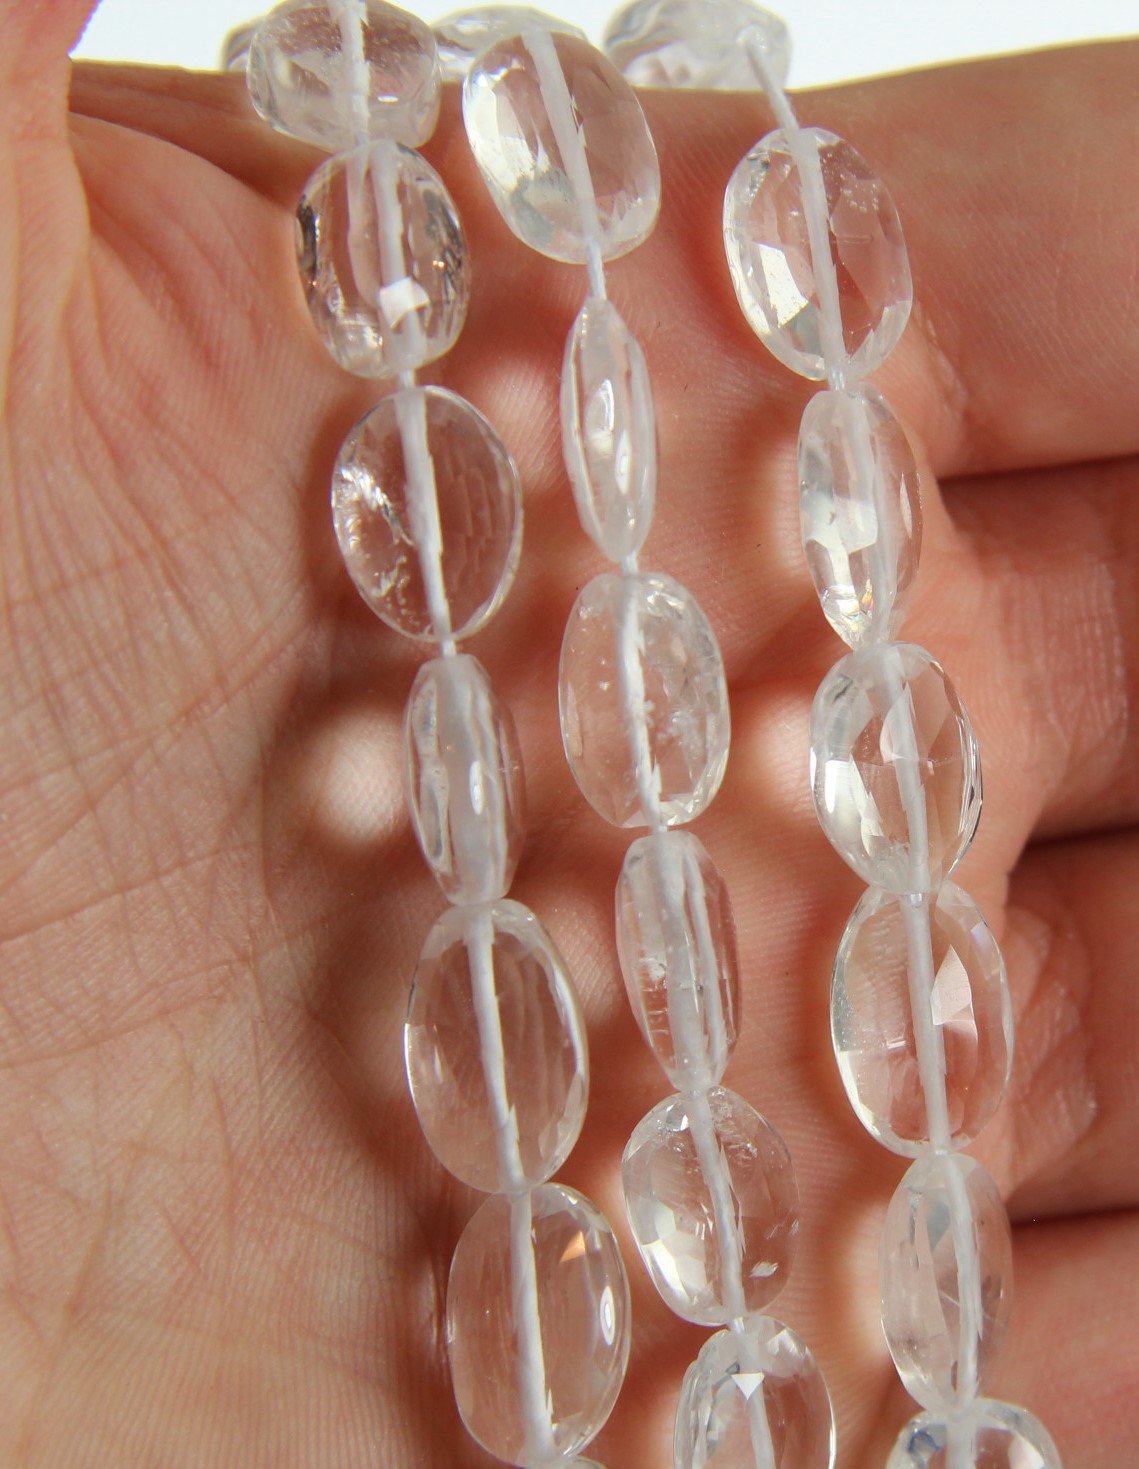 SKU 11811 - a Crystal beads Jewelry Design image